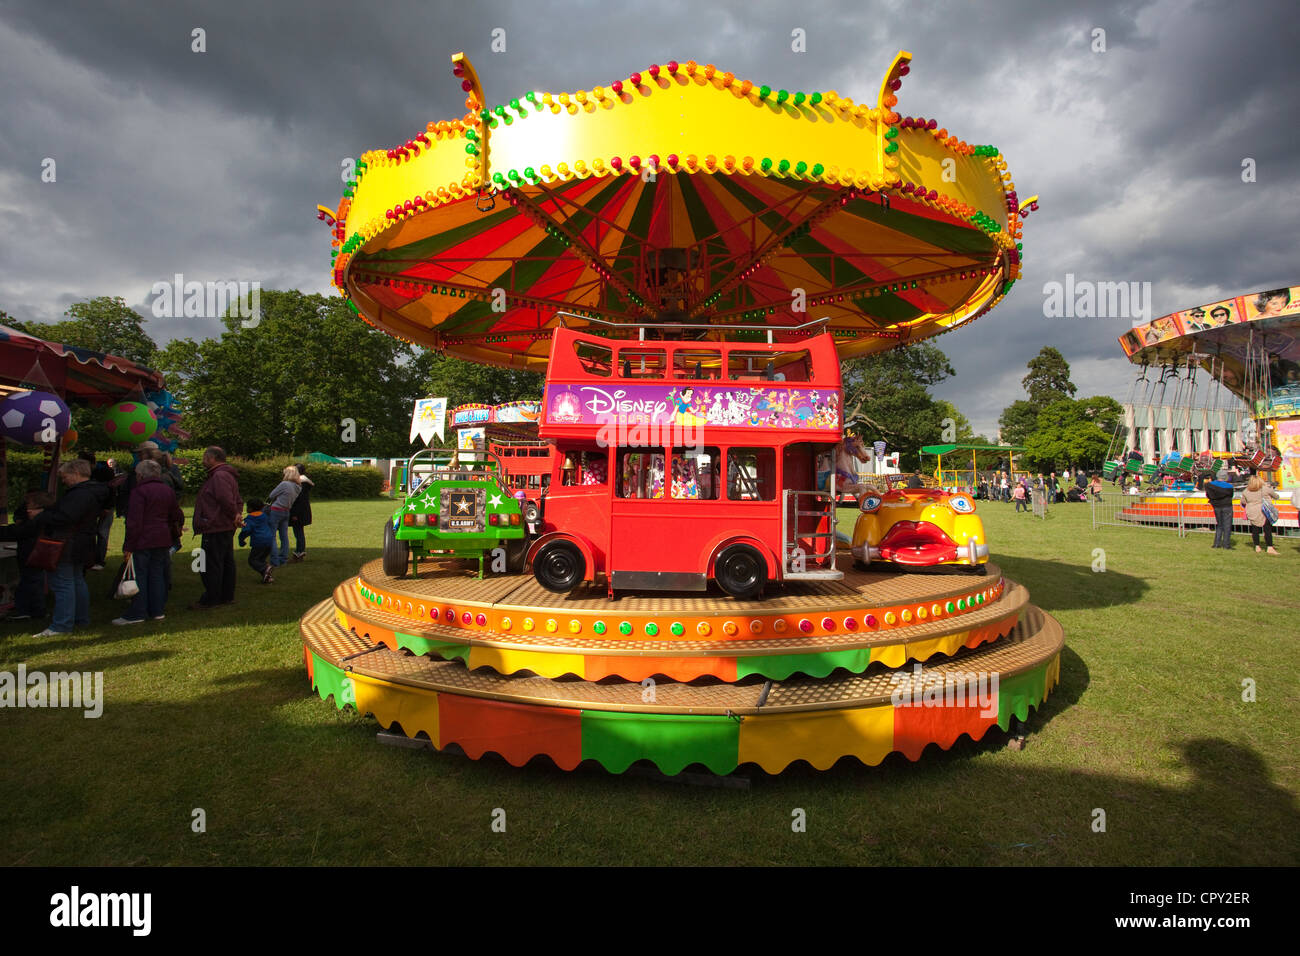 Carousel at British Fairground. Stock Photo